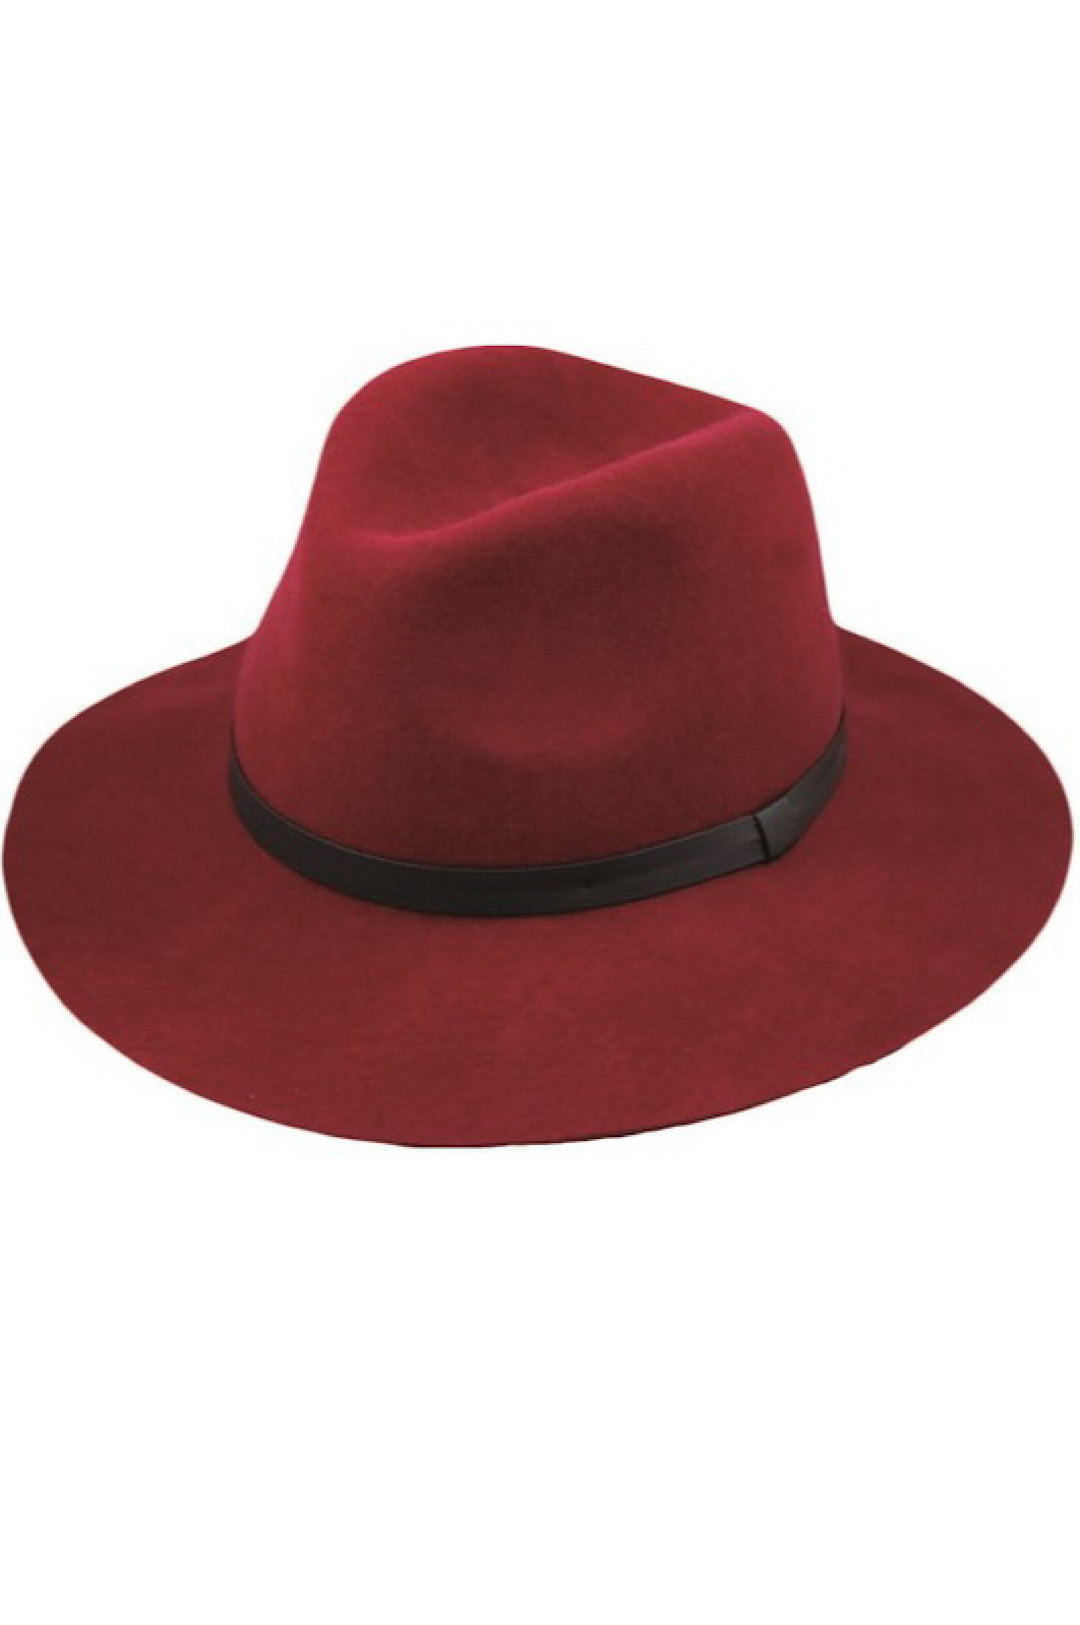 Burgundy Fedora Style Hat